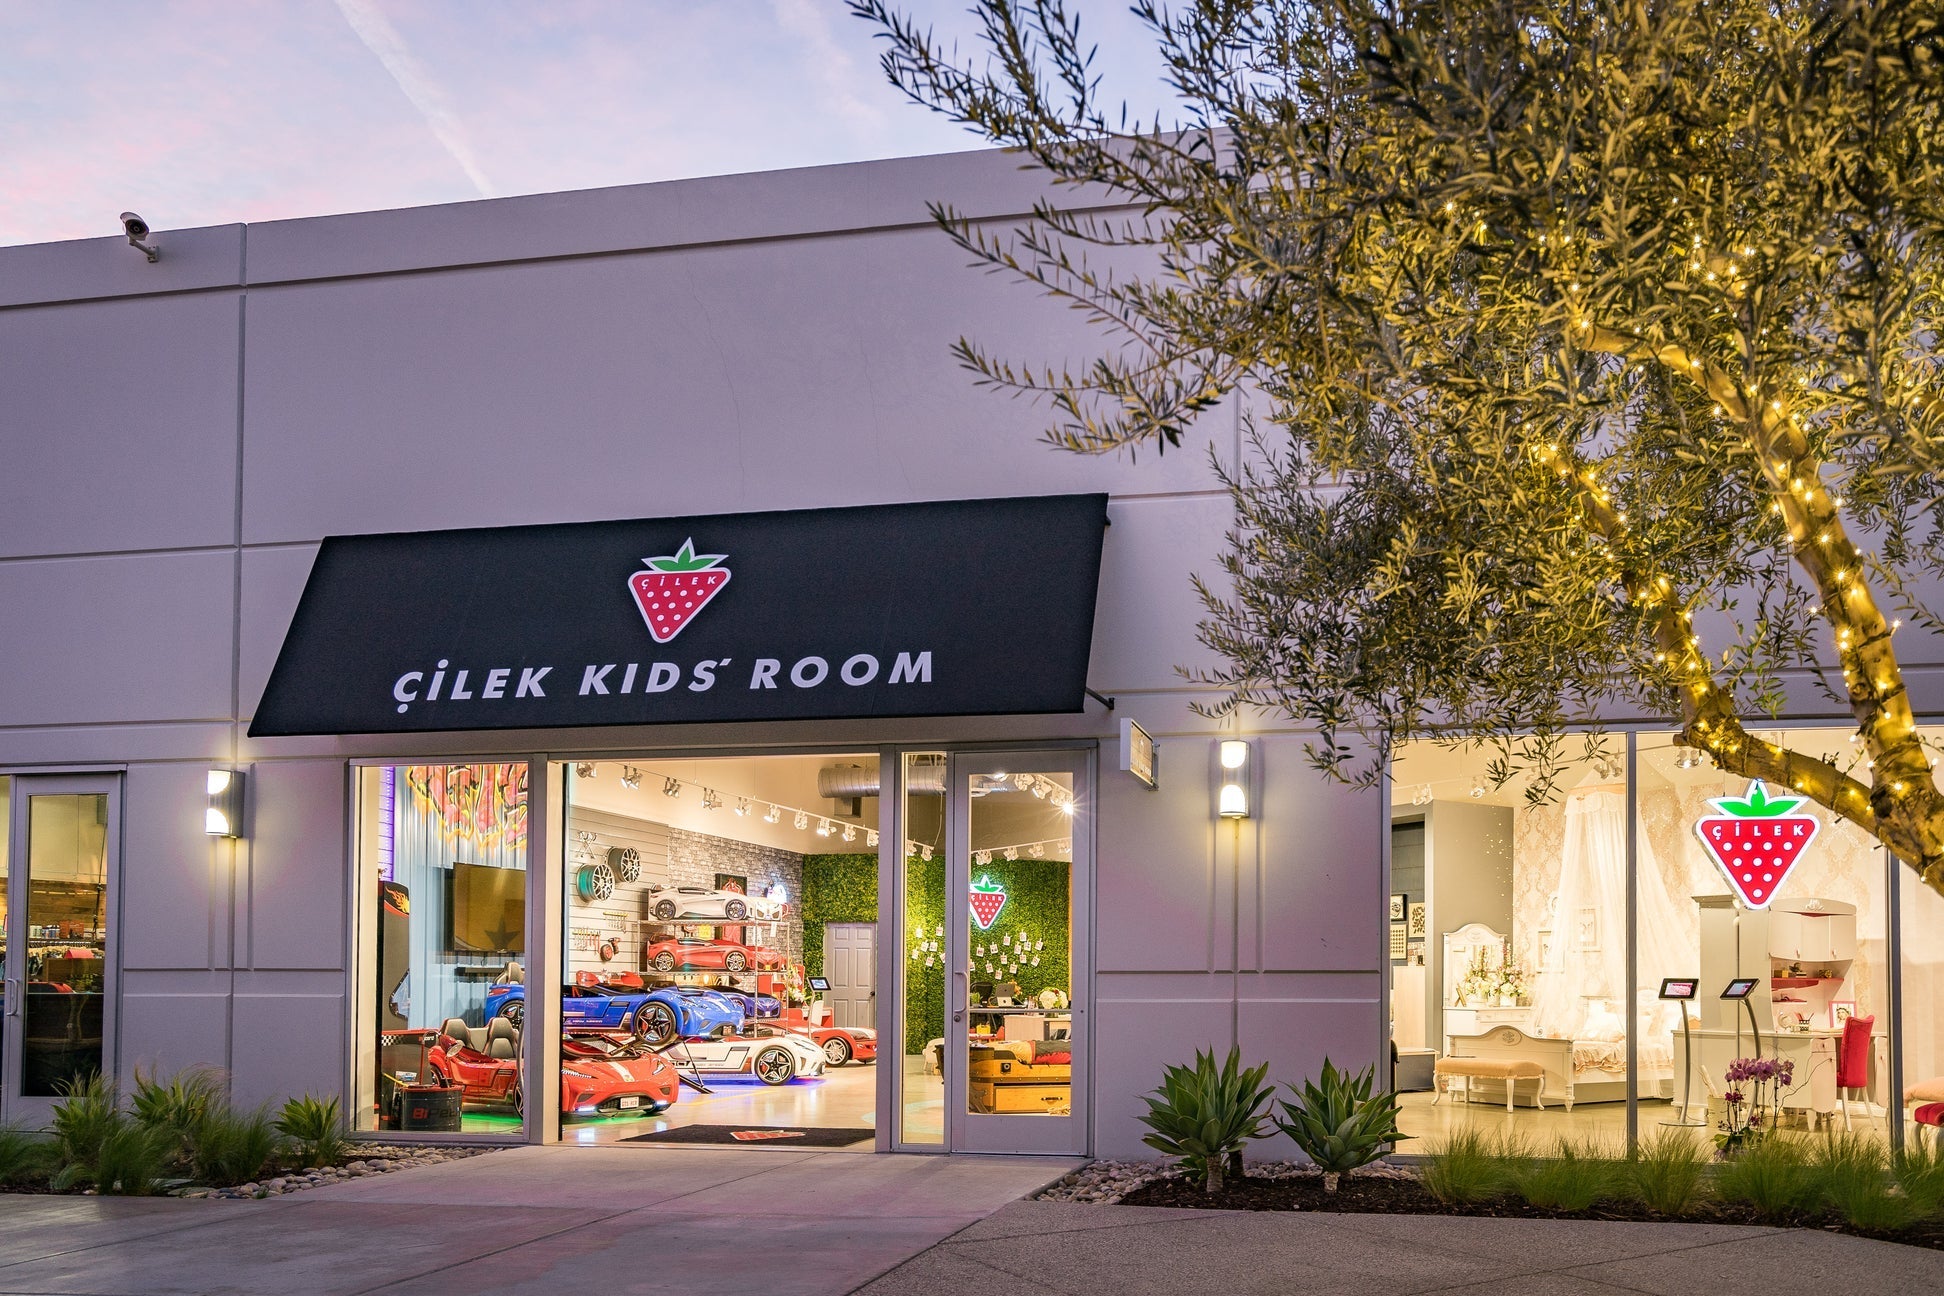 Cilek showroom | معرض تشيلك لاثاث الاطفال